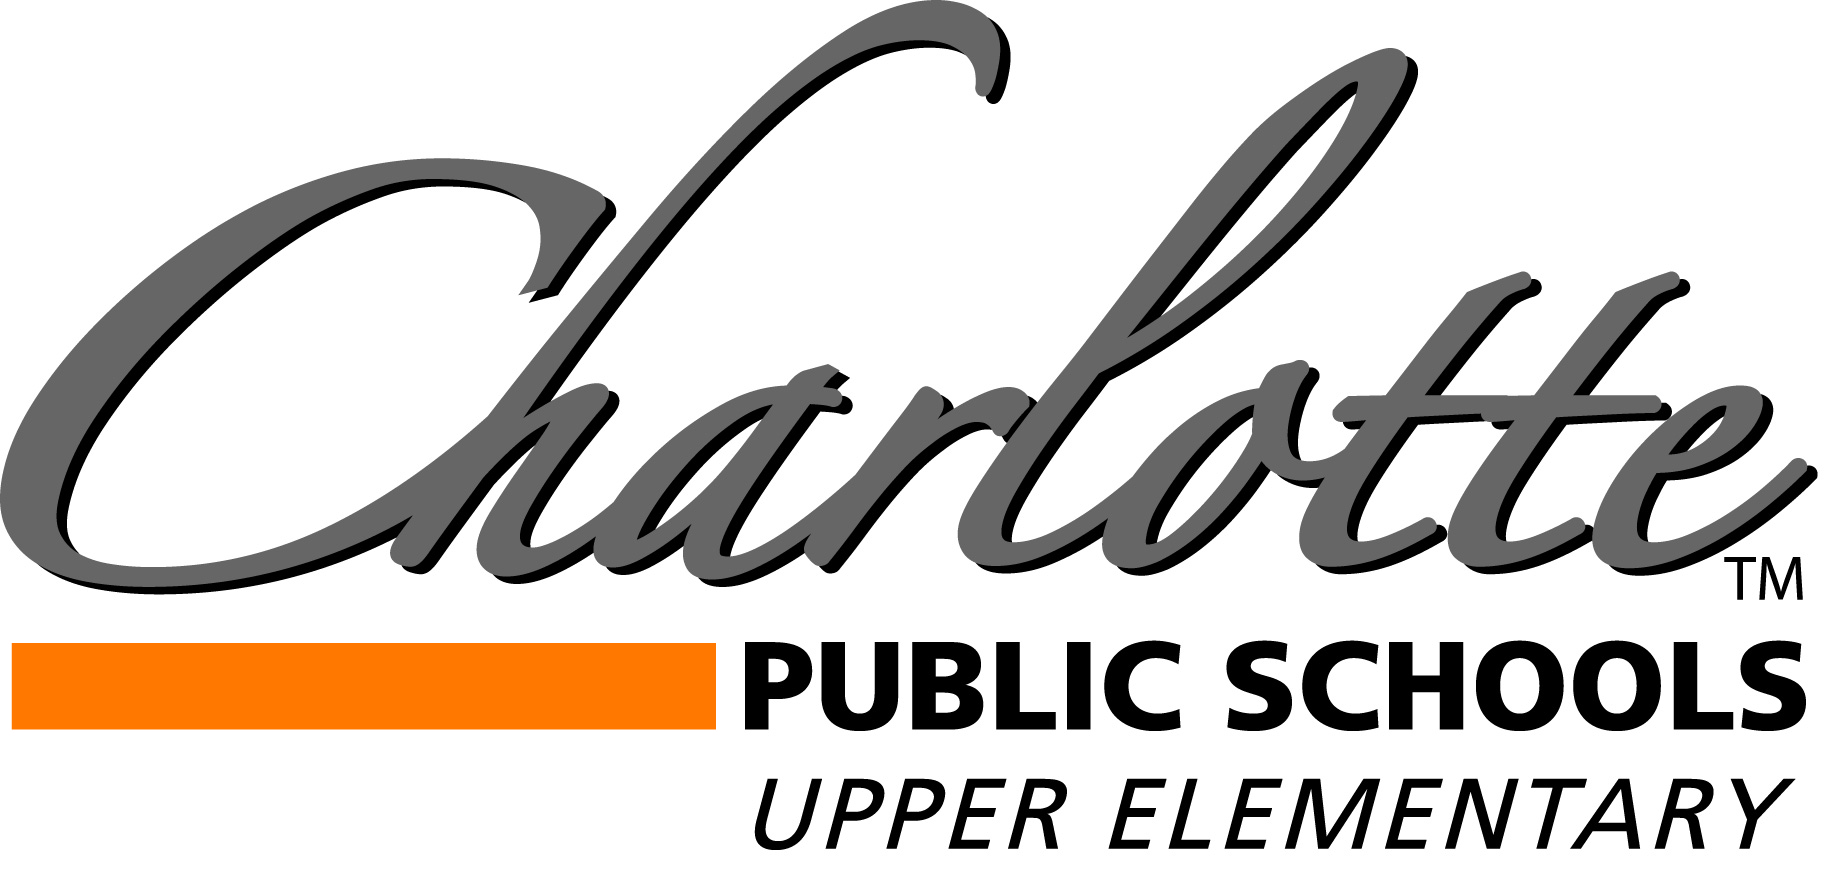 Charlotte Public Schools Upper Elementary